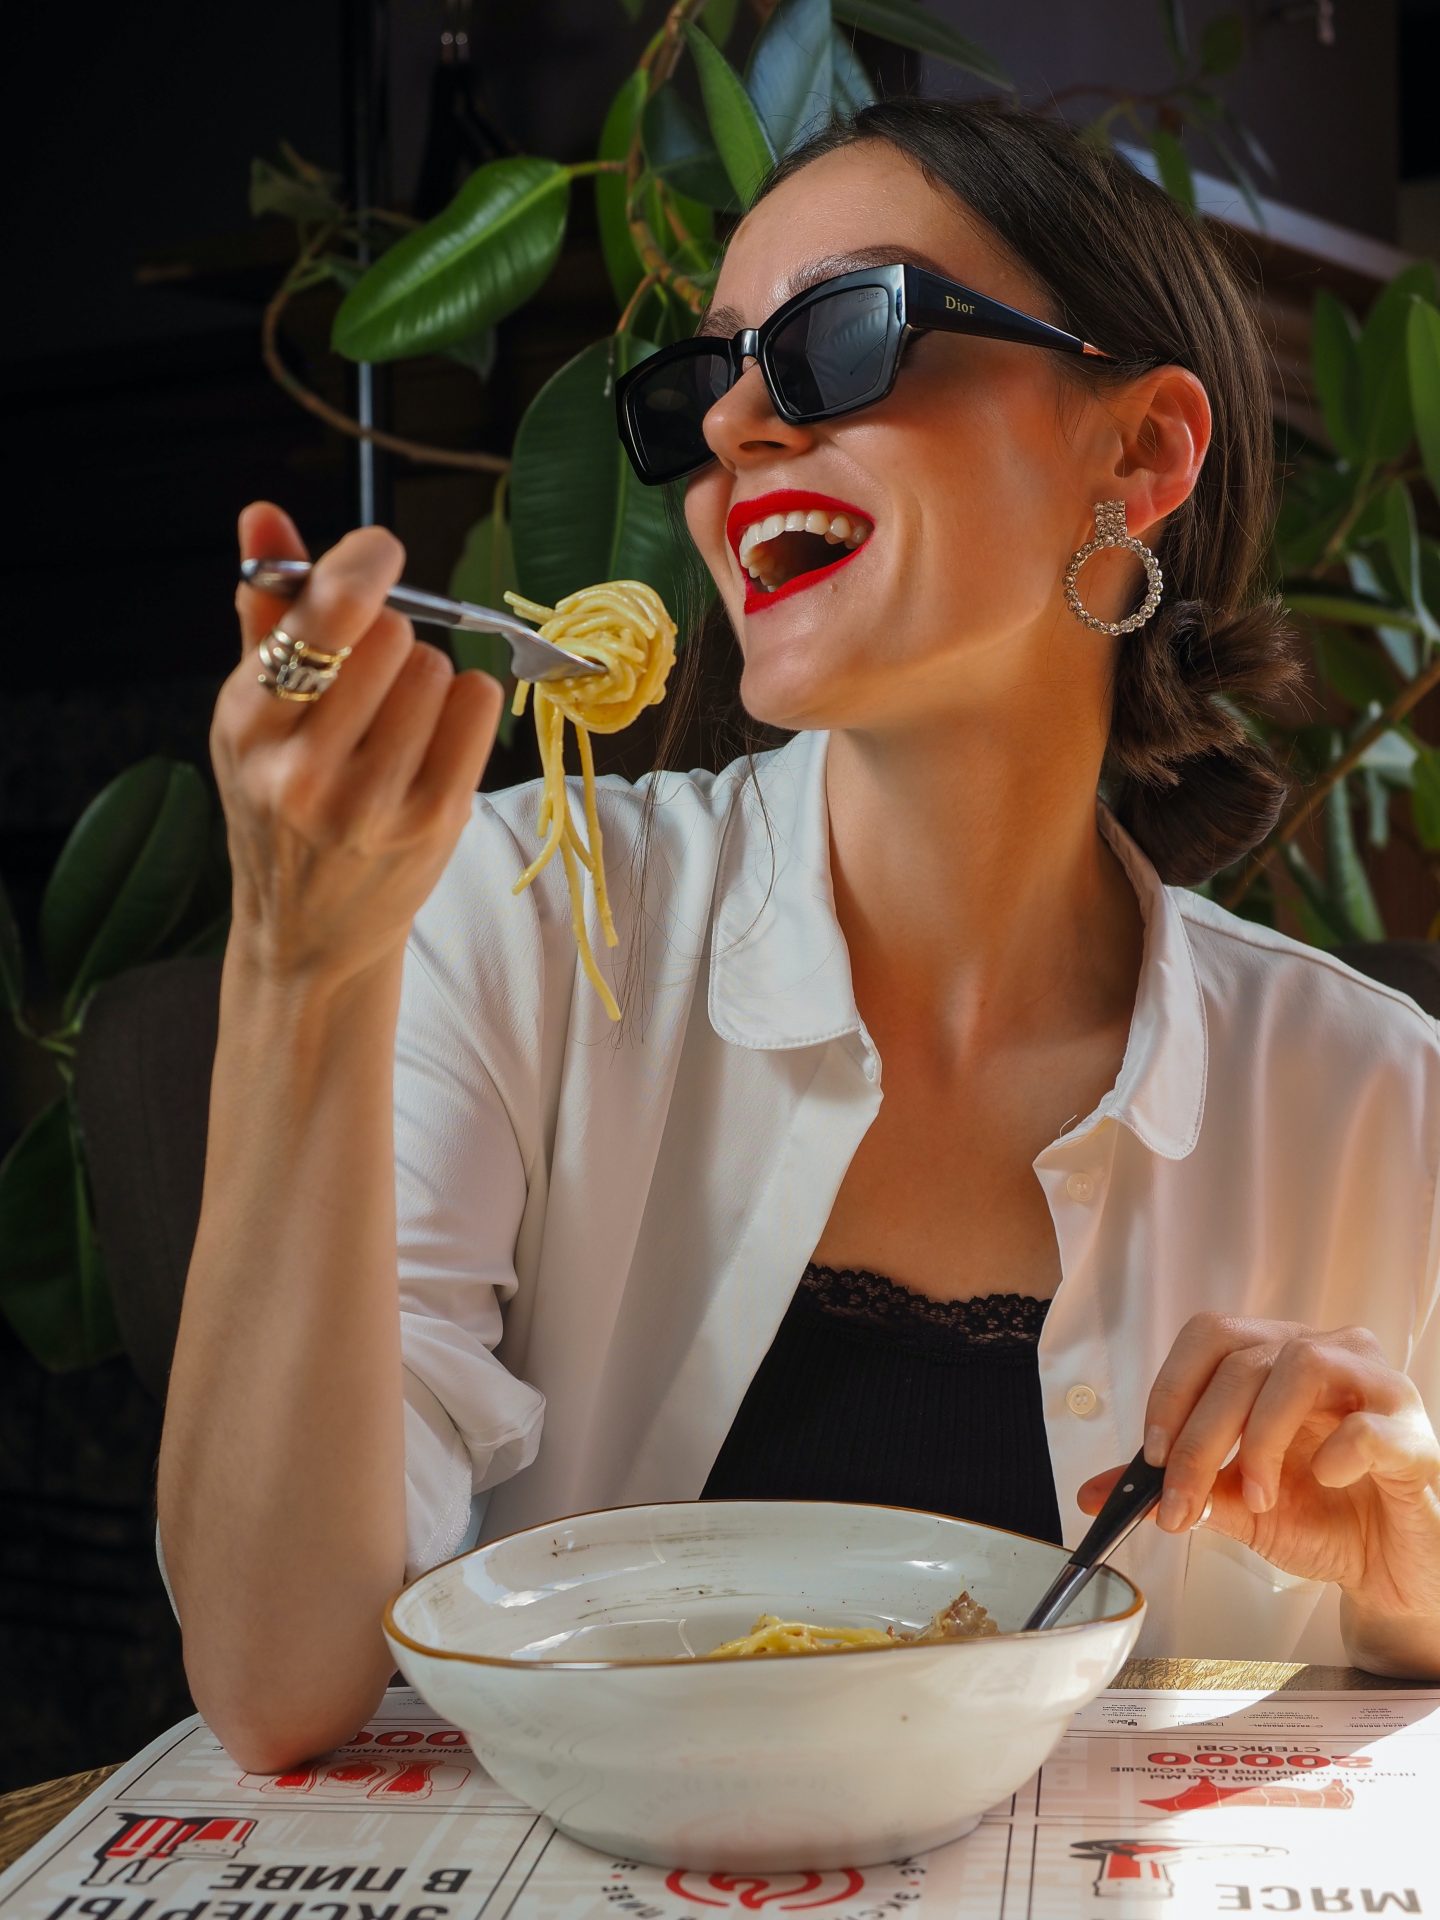 A woman enjoying the pasta